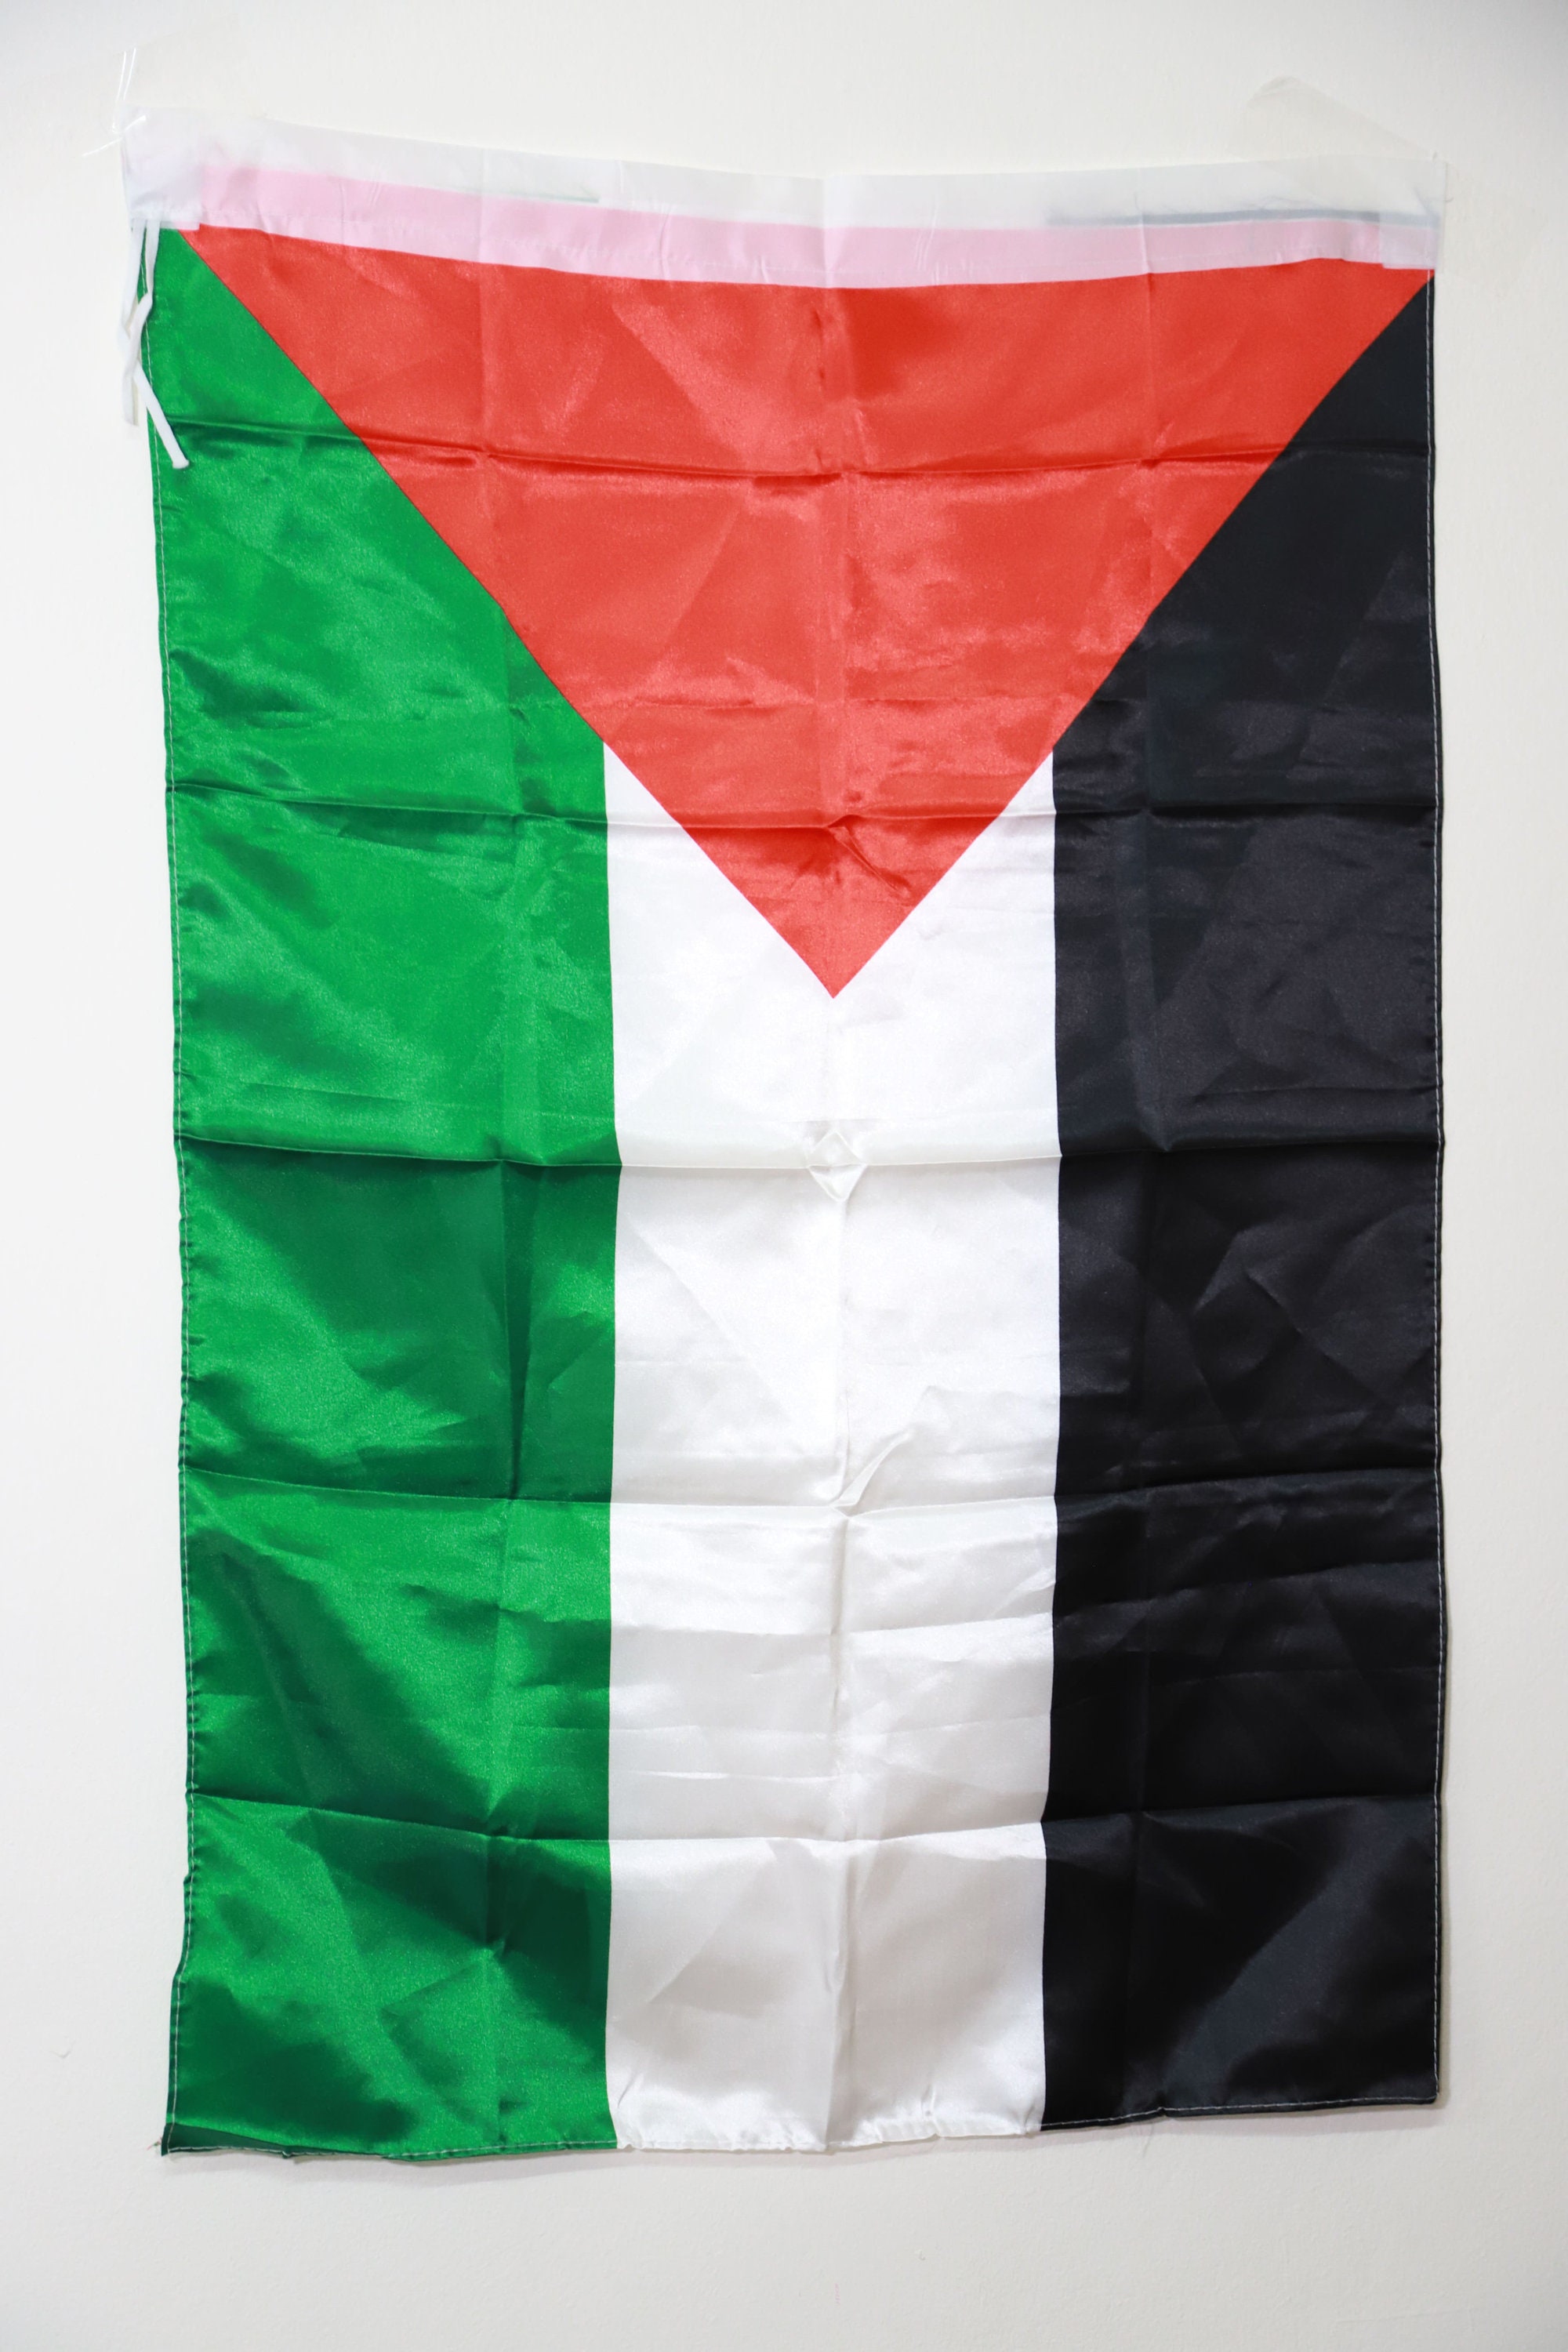 Fahne Palästina-Israel mit Friedenstaube 90 x 150 cm